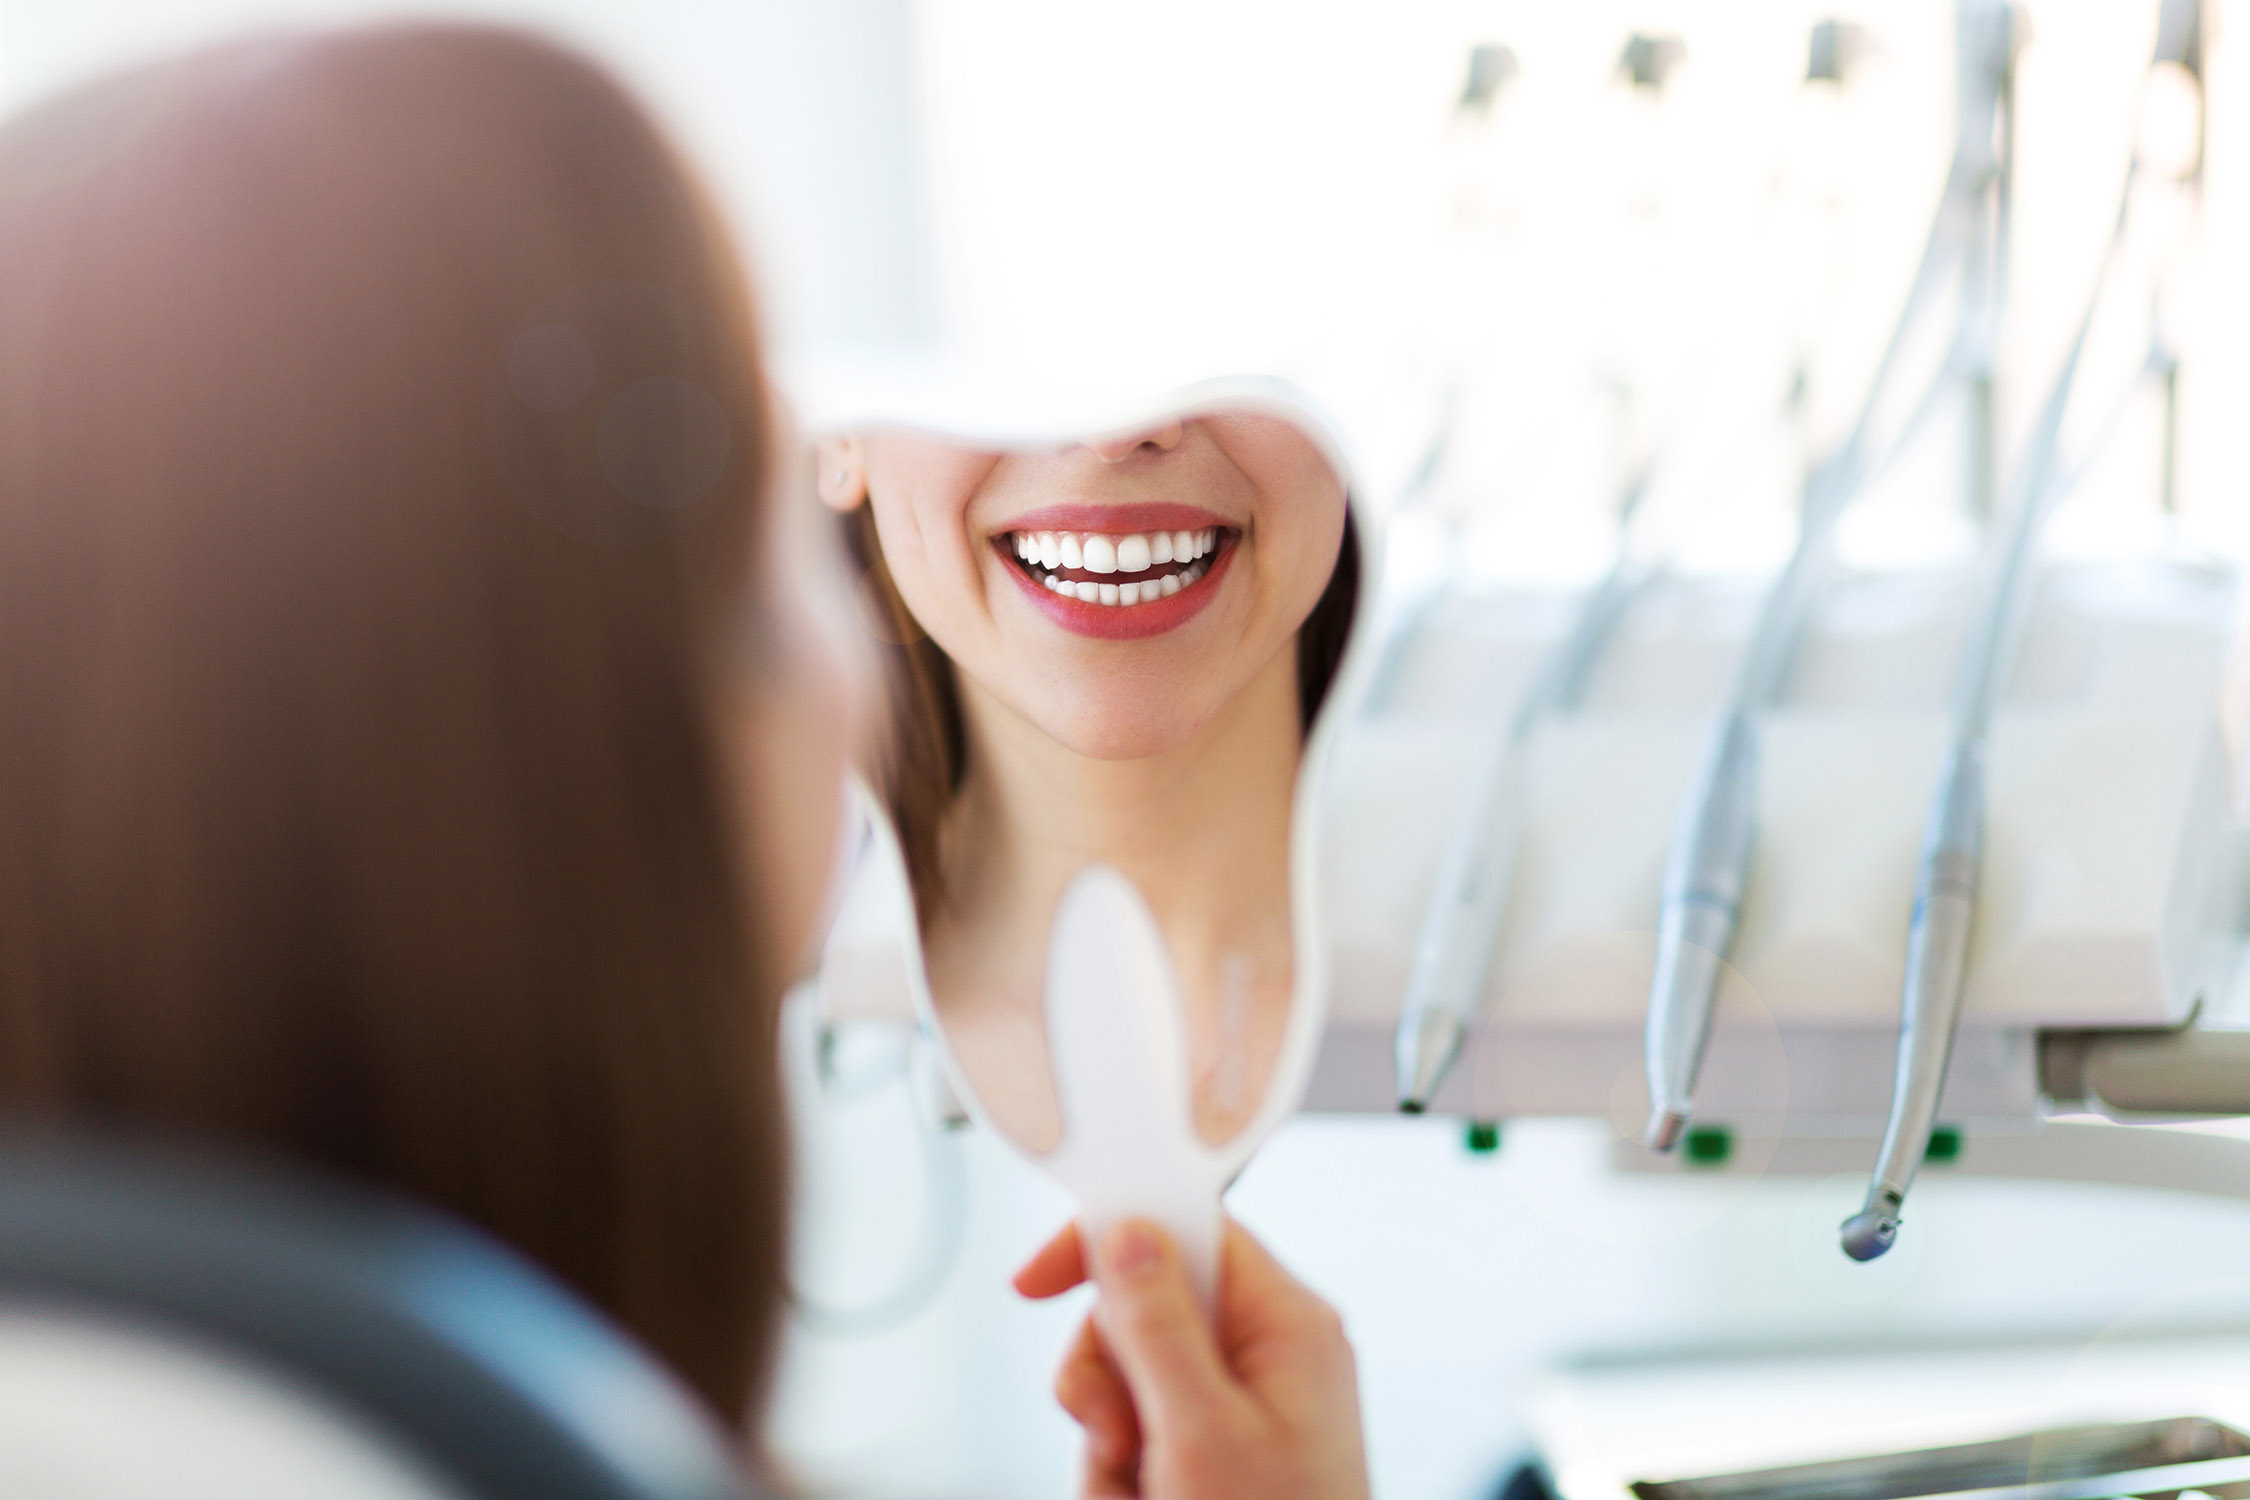 Does Teeth Whitening Damage Your Teeth?